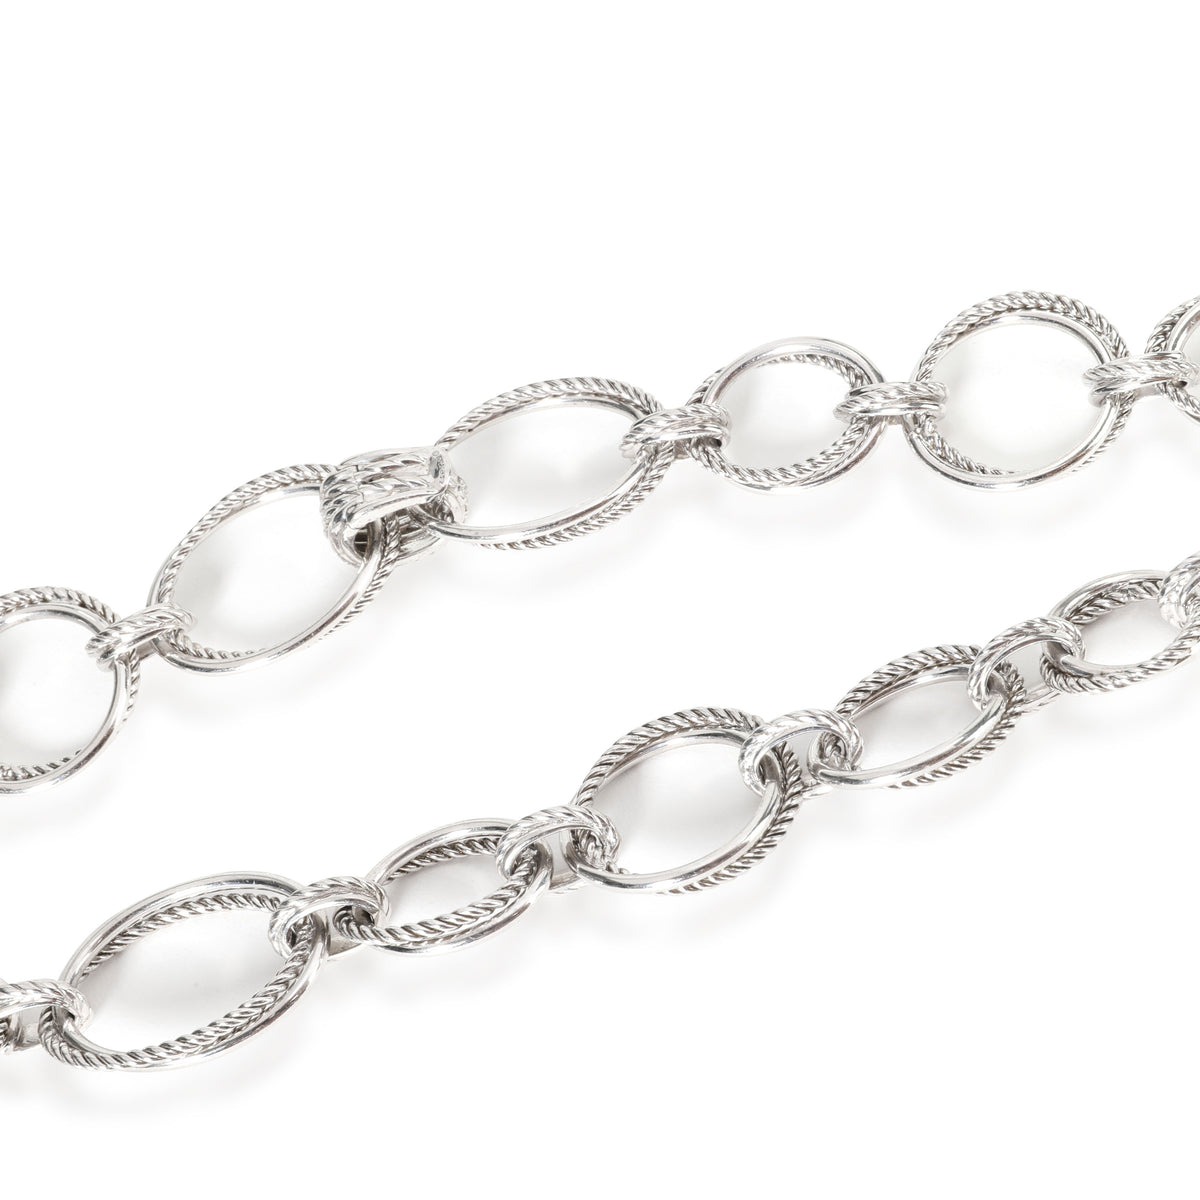 David Yurman Diamond Crossover Convertible Necklace in Sterling Silver 0.47 CTW